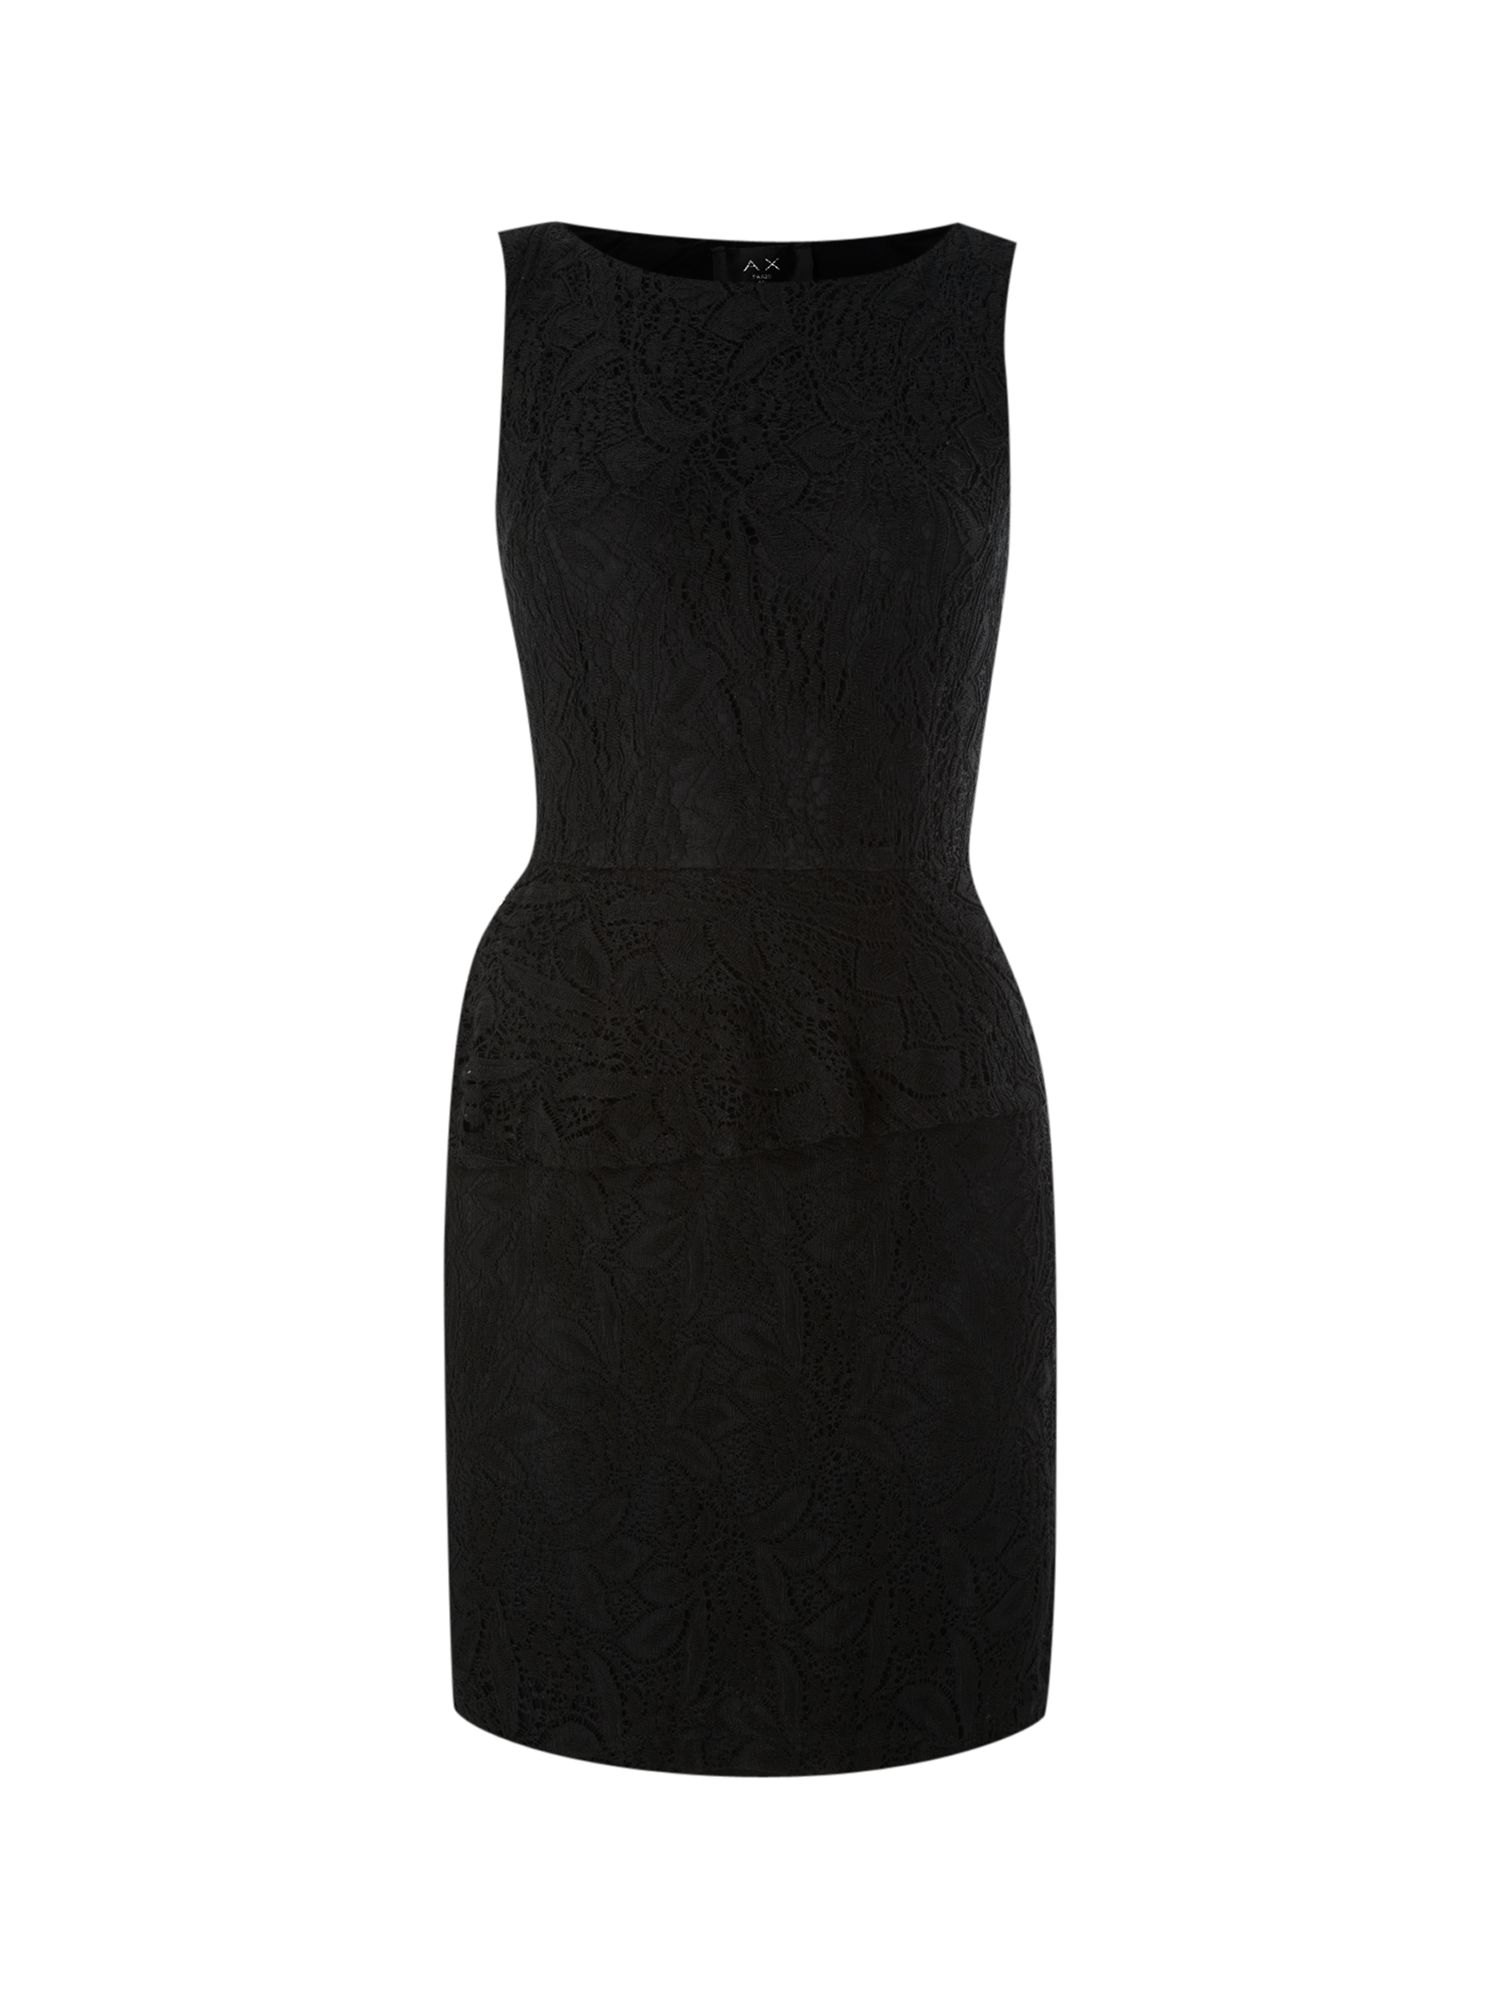 Ax Paris Lace Peplum Dress in Black | Lyst